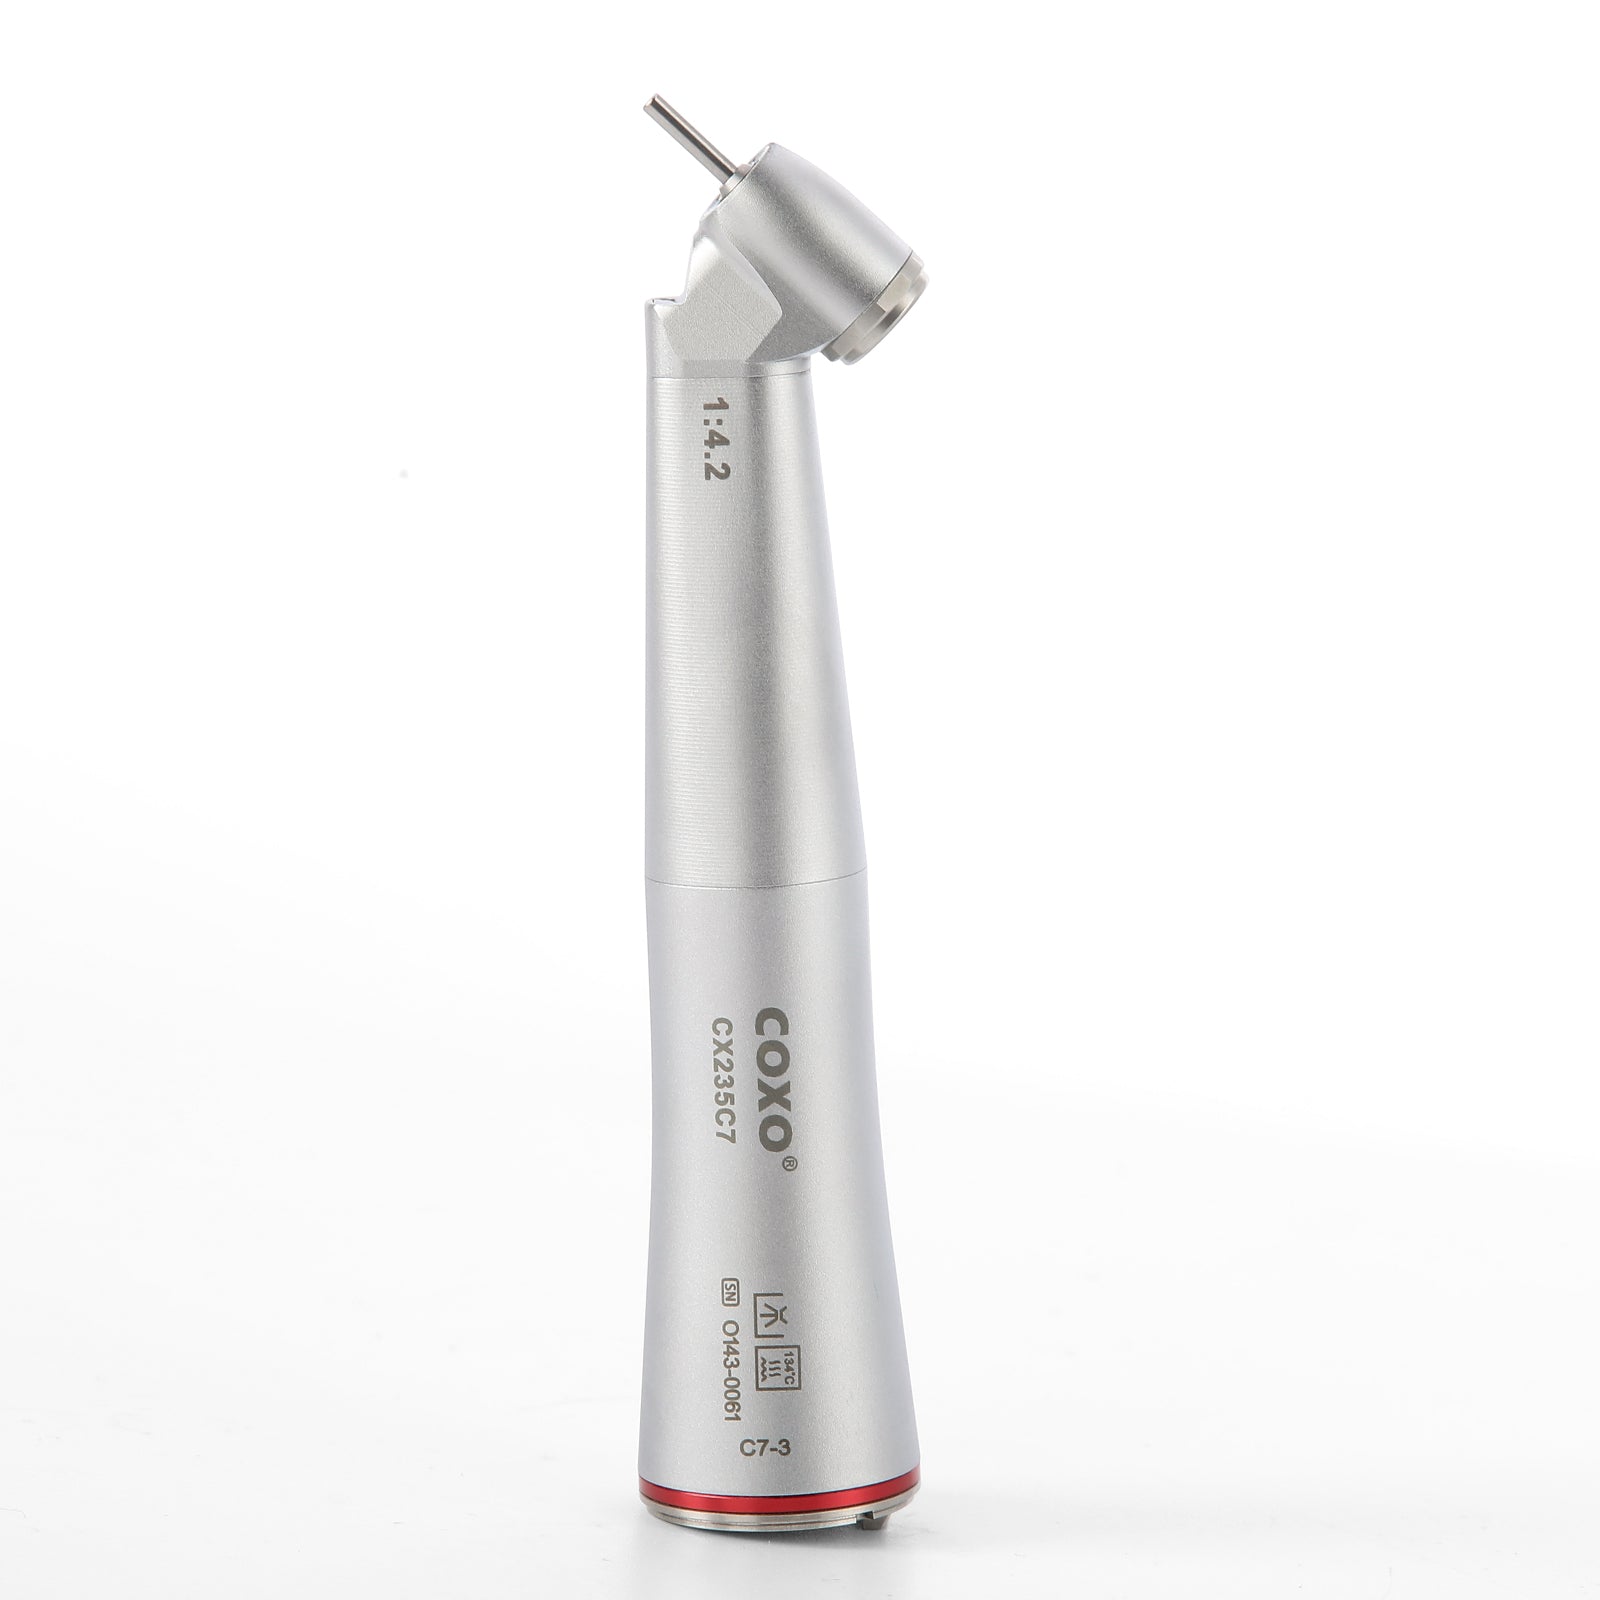 COXO Dental 1:4.2 Increasing 45 Degree Fiber Optic Electric Contra Angle Handpiece CX235C7-3 - azdentall.com